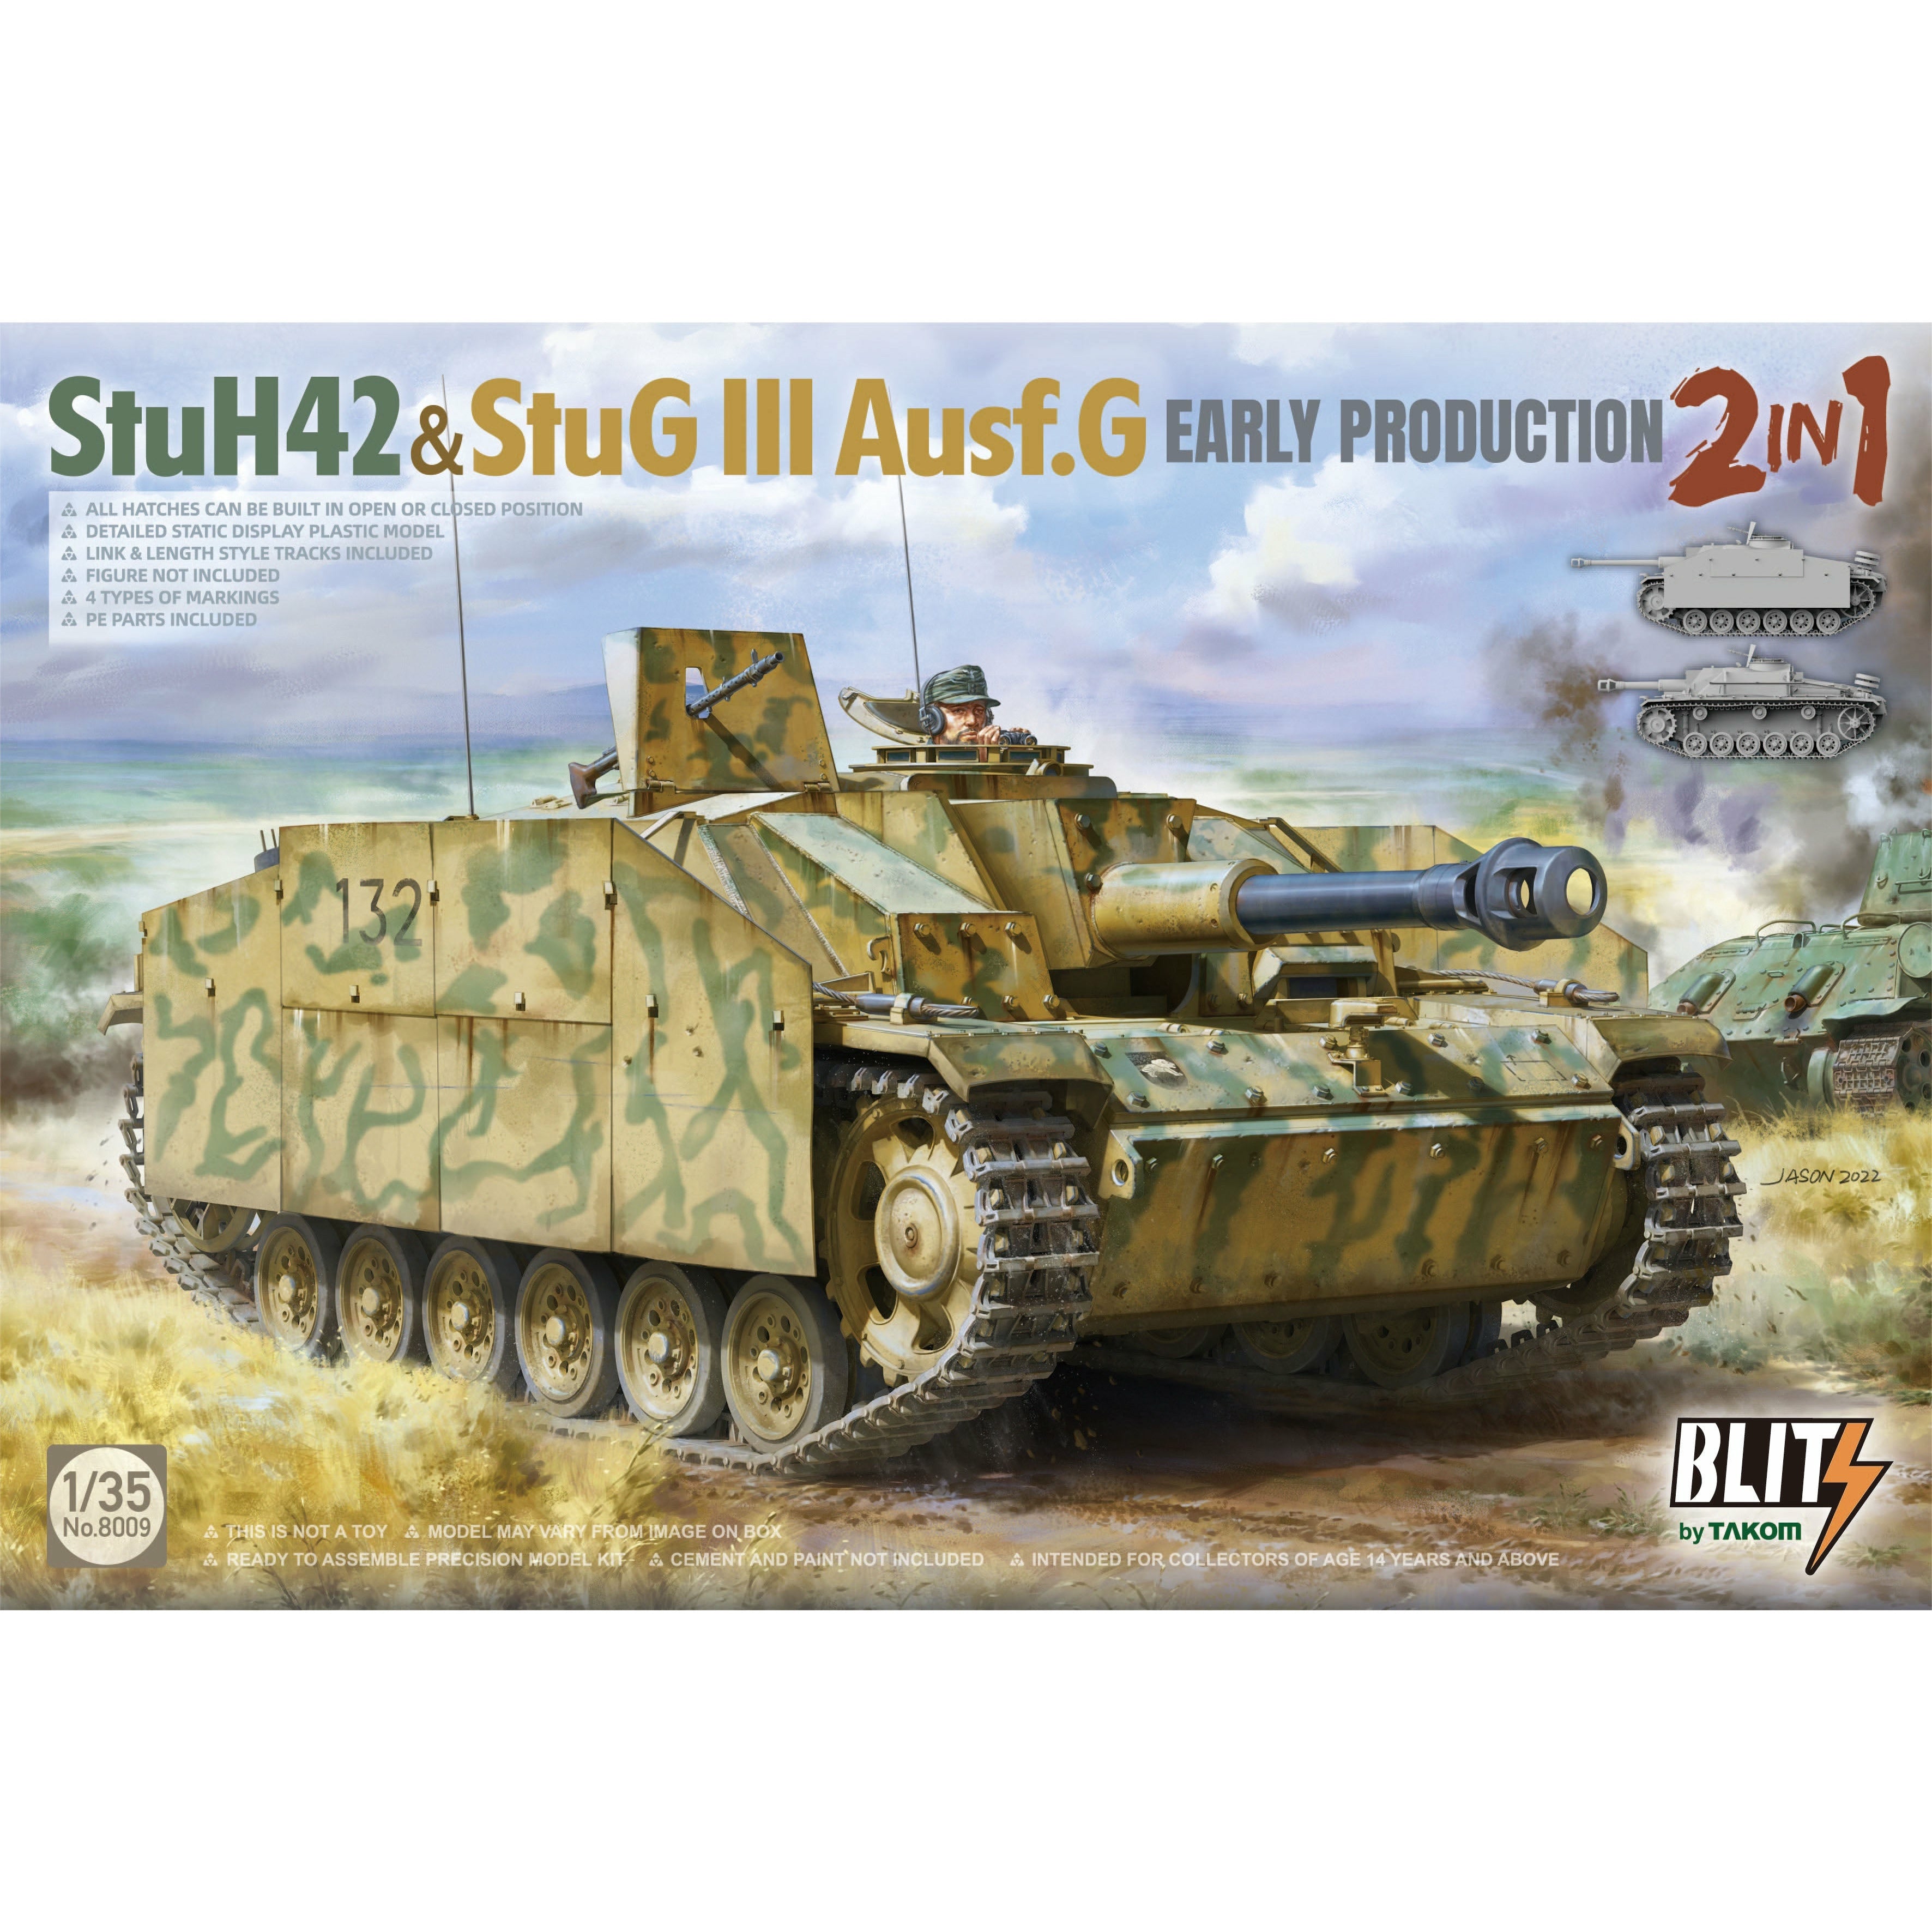 Stuh42 & Stug III Ausf.g Early Prod. 2in1 Blitz Series 1/35 #8009 by Takom